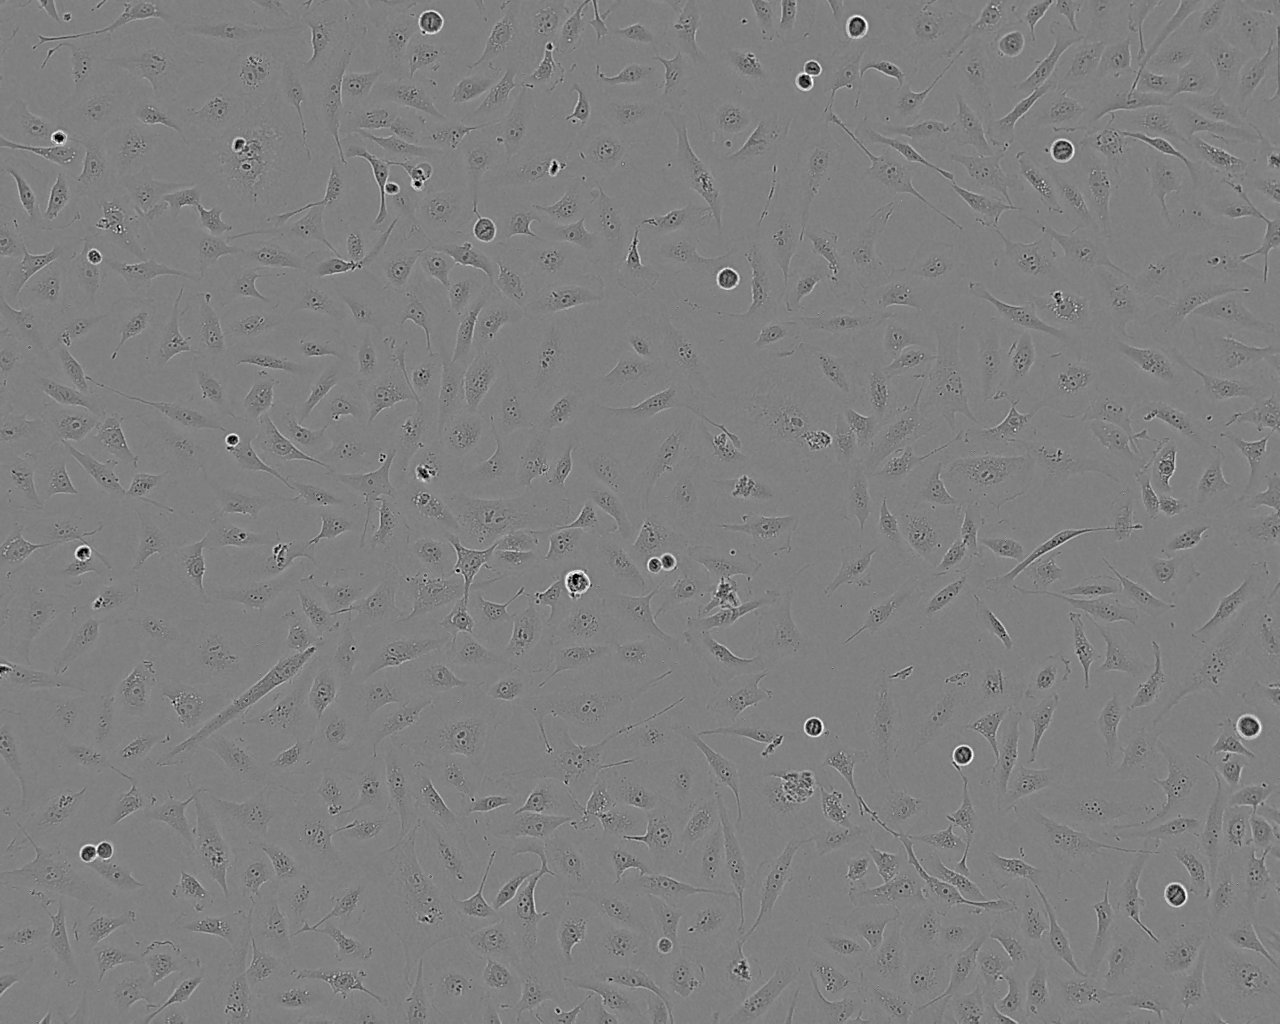 PaTu 8988s Cell:人胰腺癌细胞系